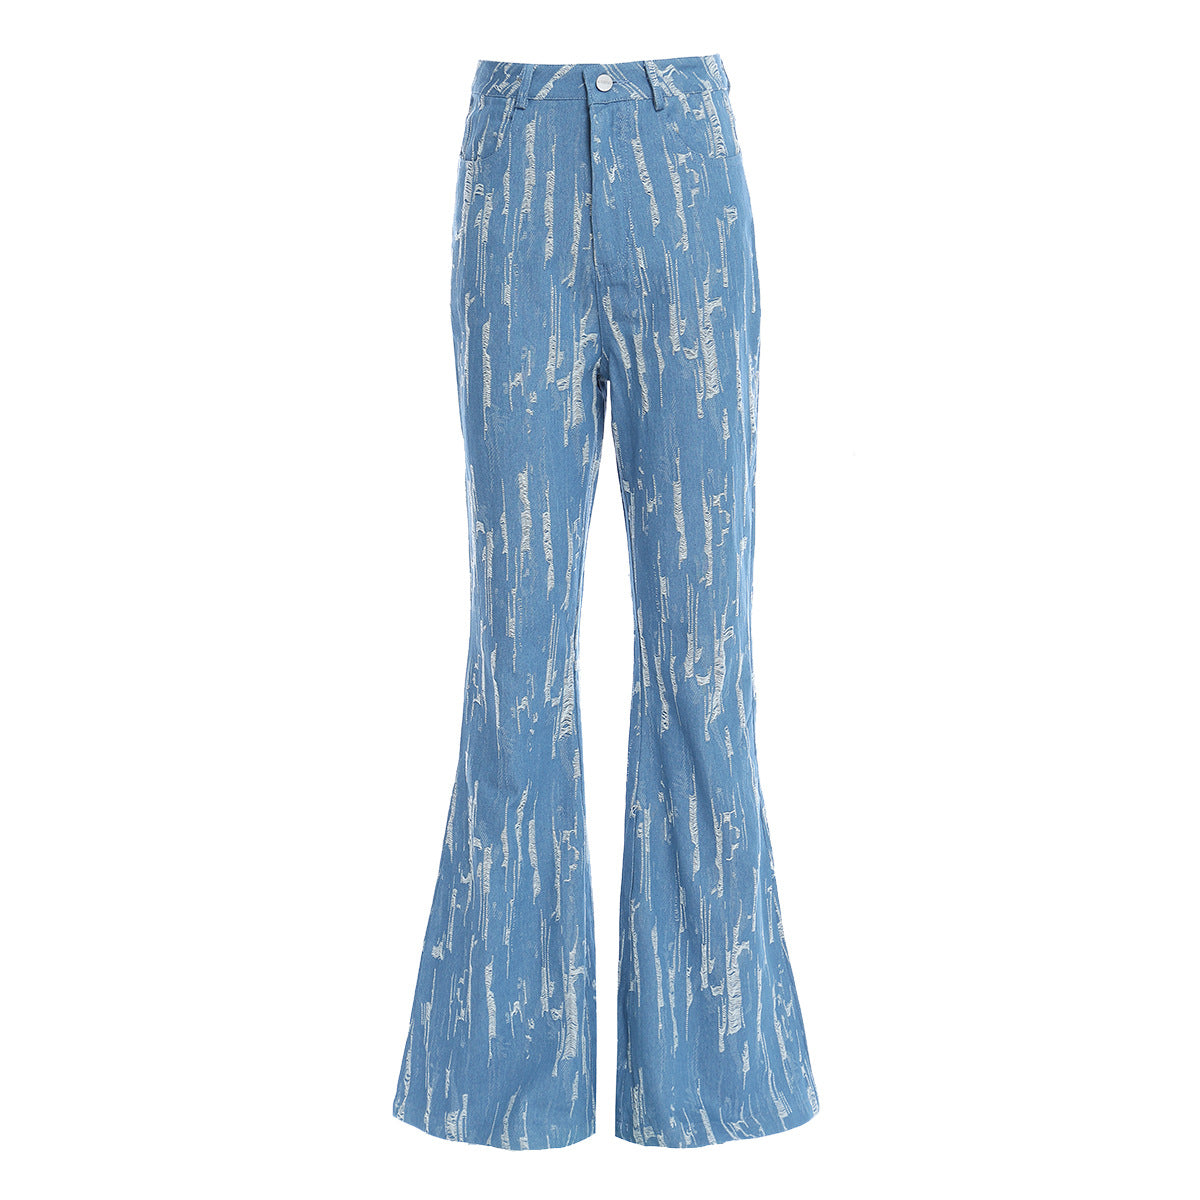 Designed Vintage Denim Trumpet Pants for Women-Pants-Light Blue-S-Free Shipping Leatheretro